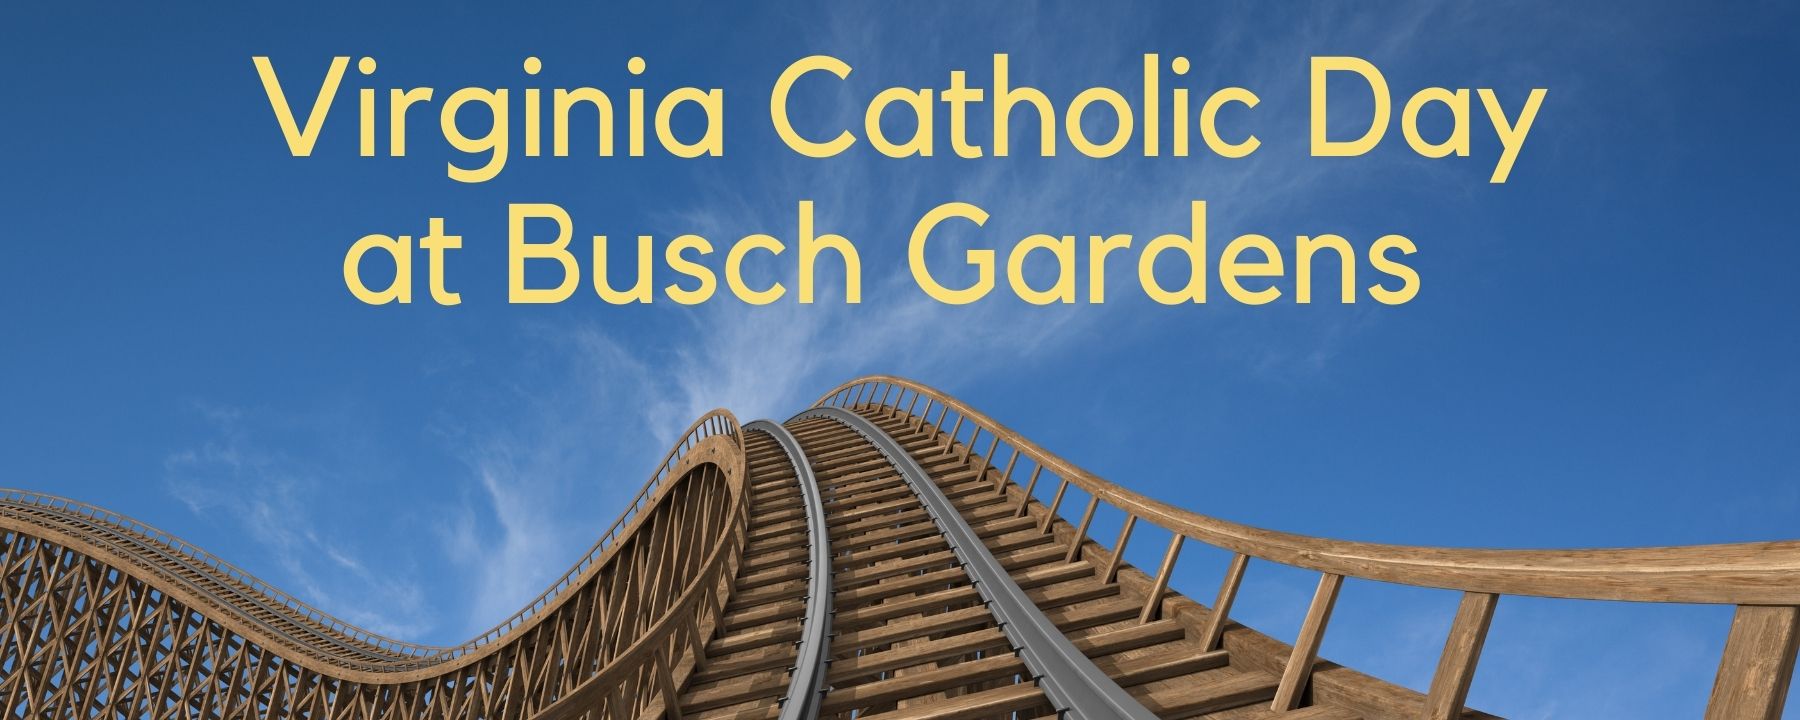 Virginia Catholic Day at Busch Gardens